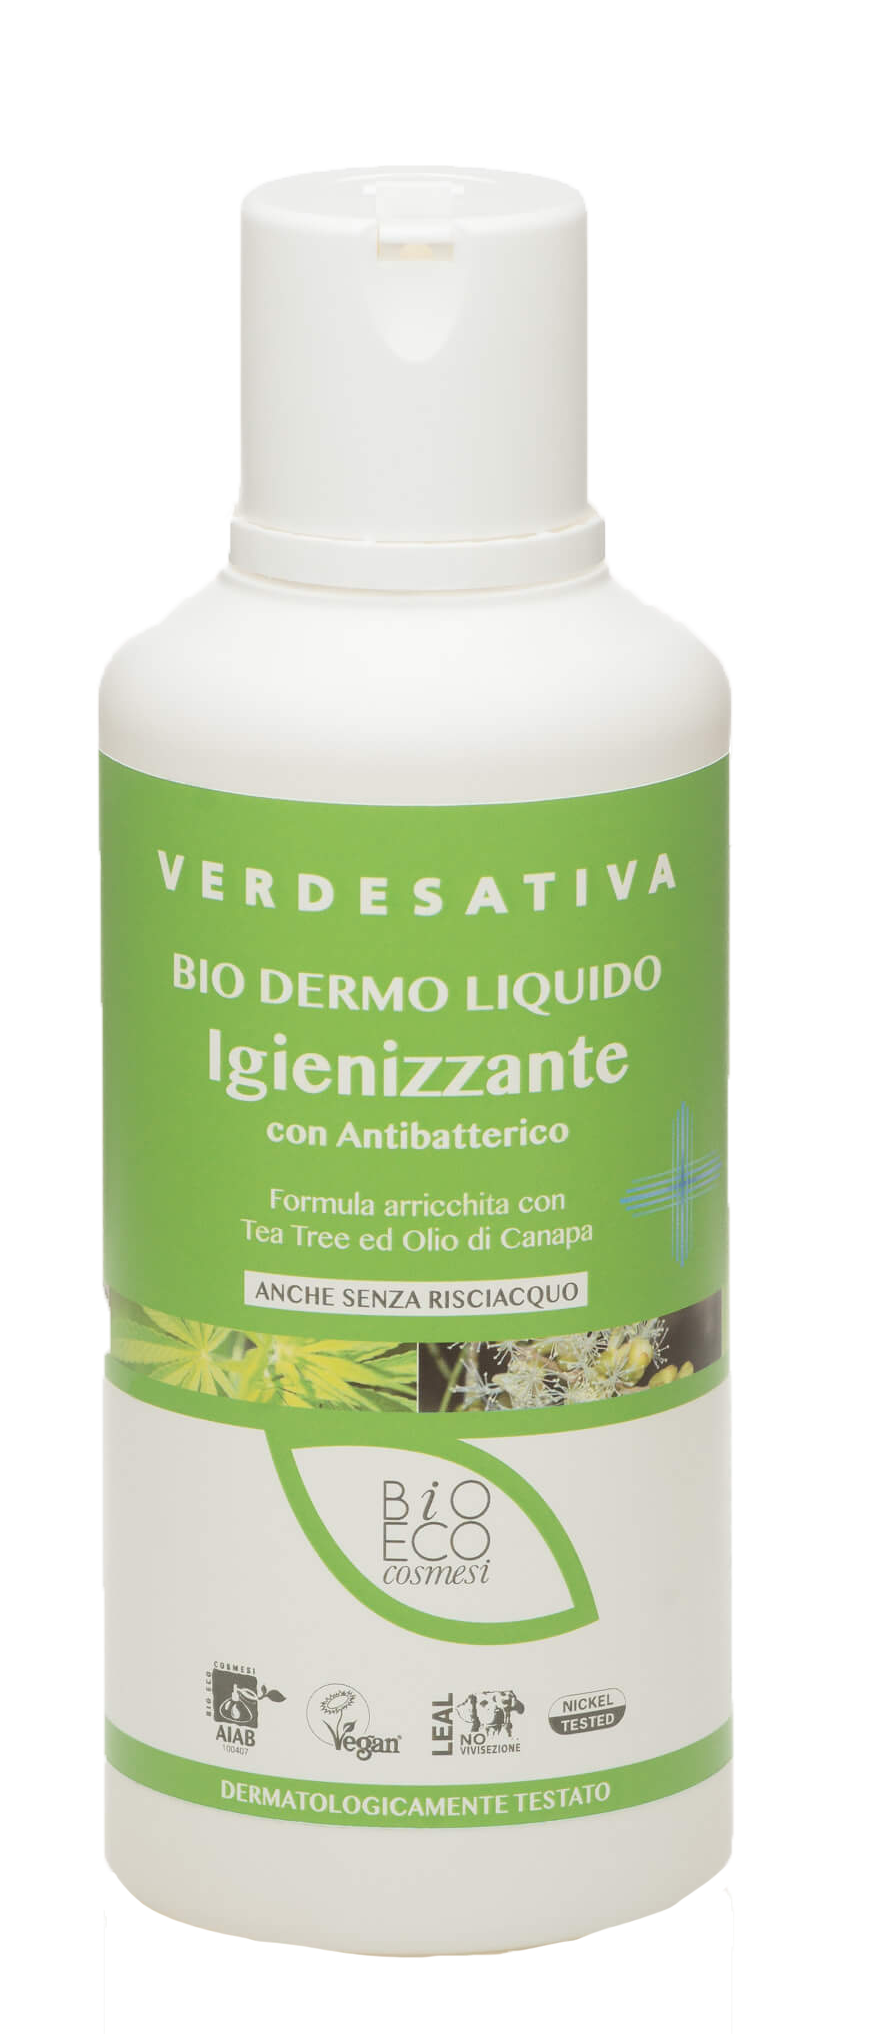 Verdesativa – Biodermoliquido Igienizzante